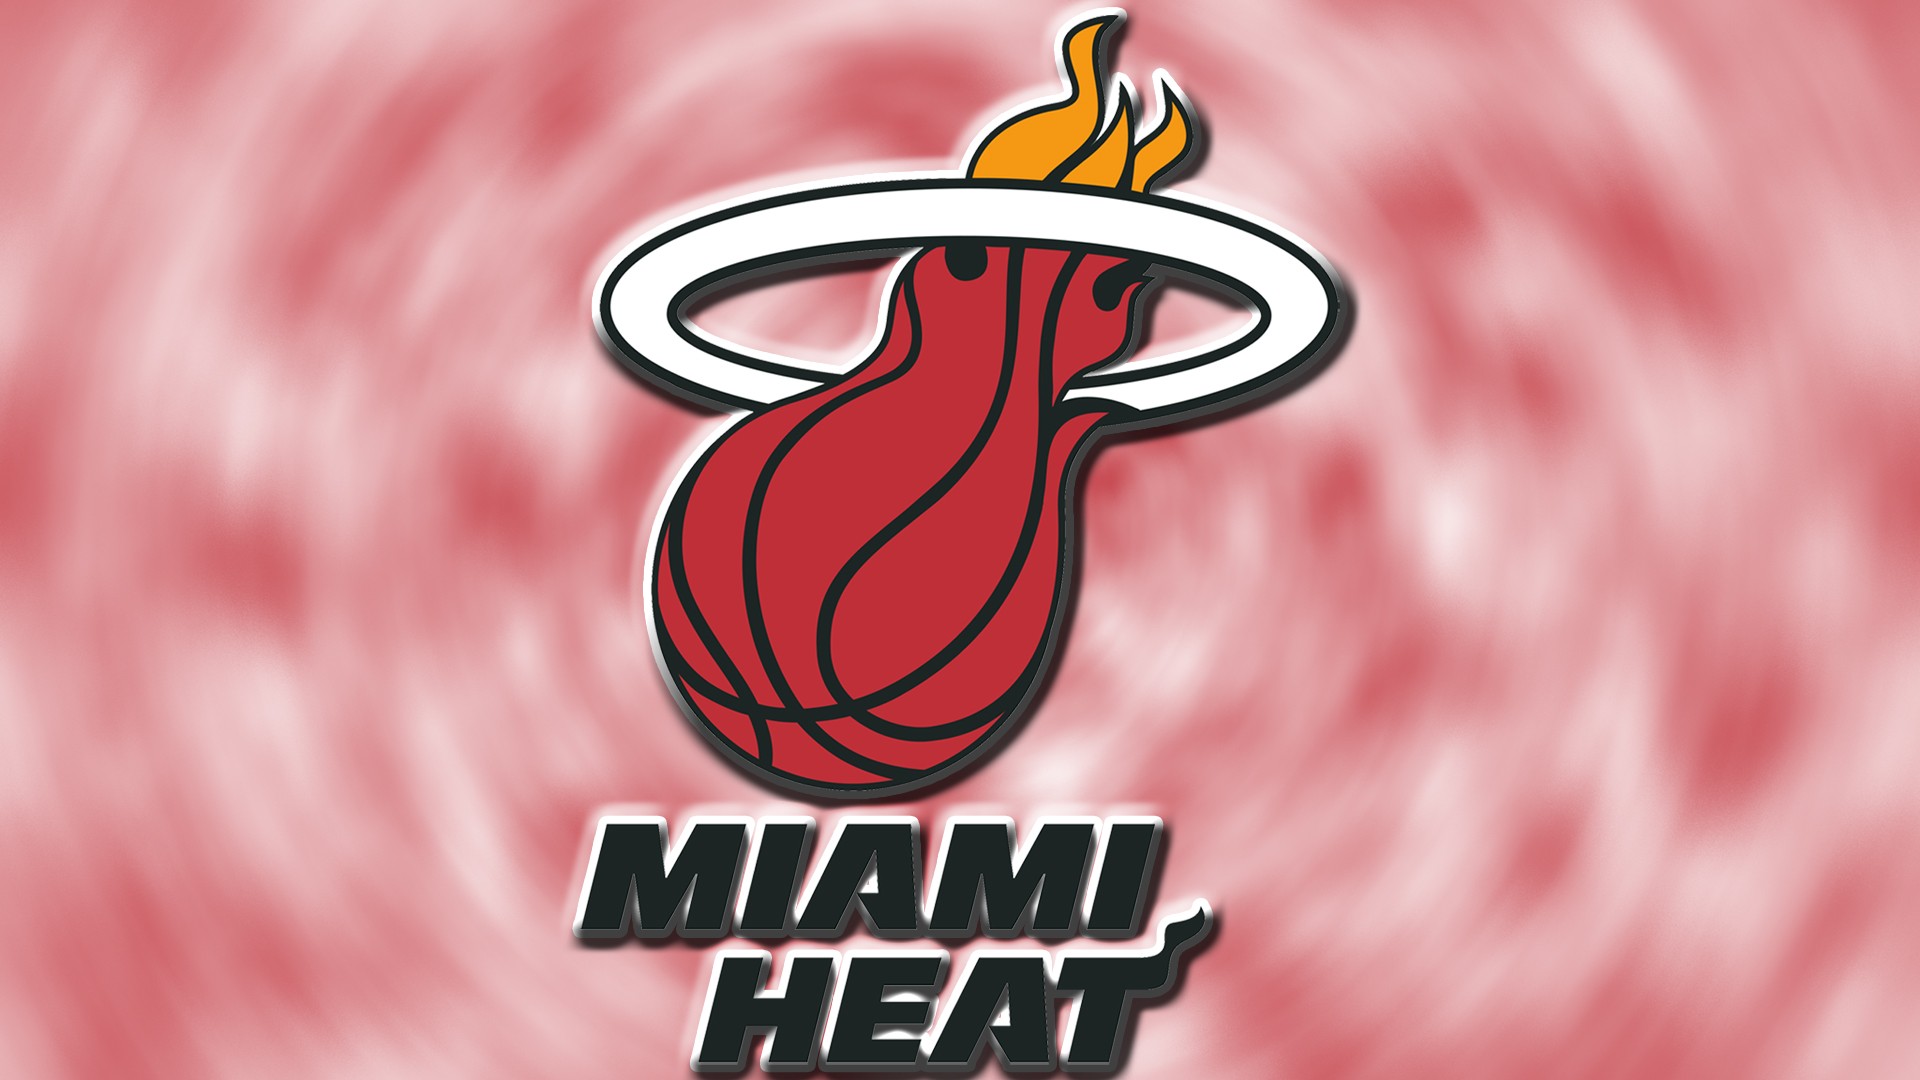 Miami Heat Full HD Widescreen Wallpaper For Desktop